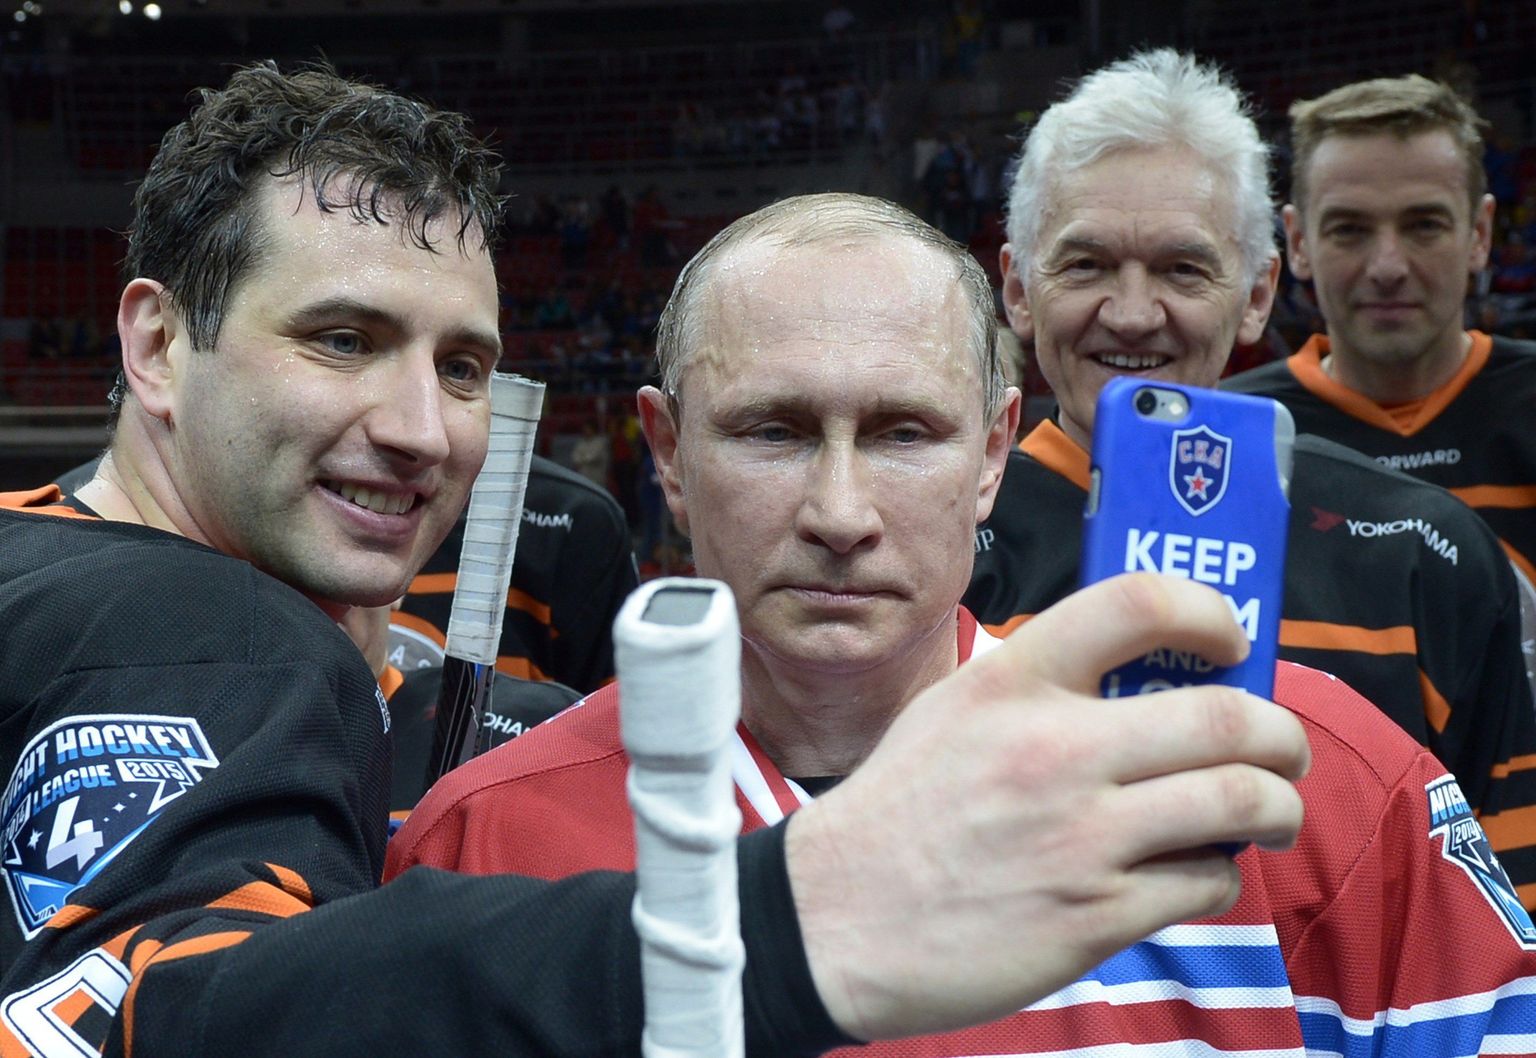 На фото Геннадий Тимченко - за спиной Путина справа